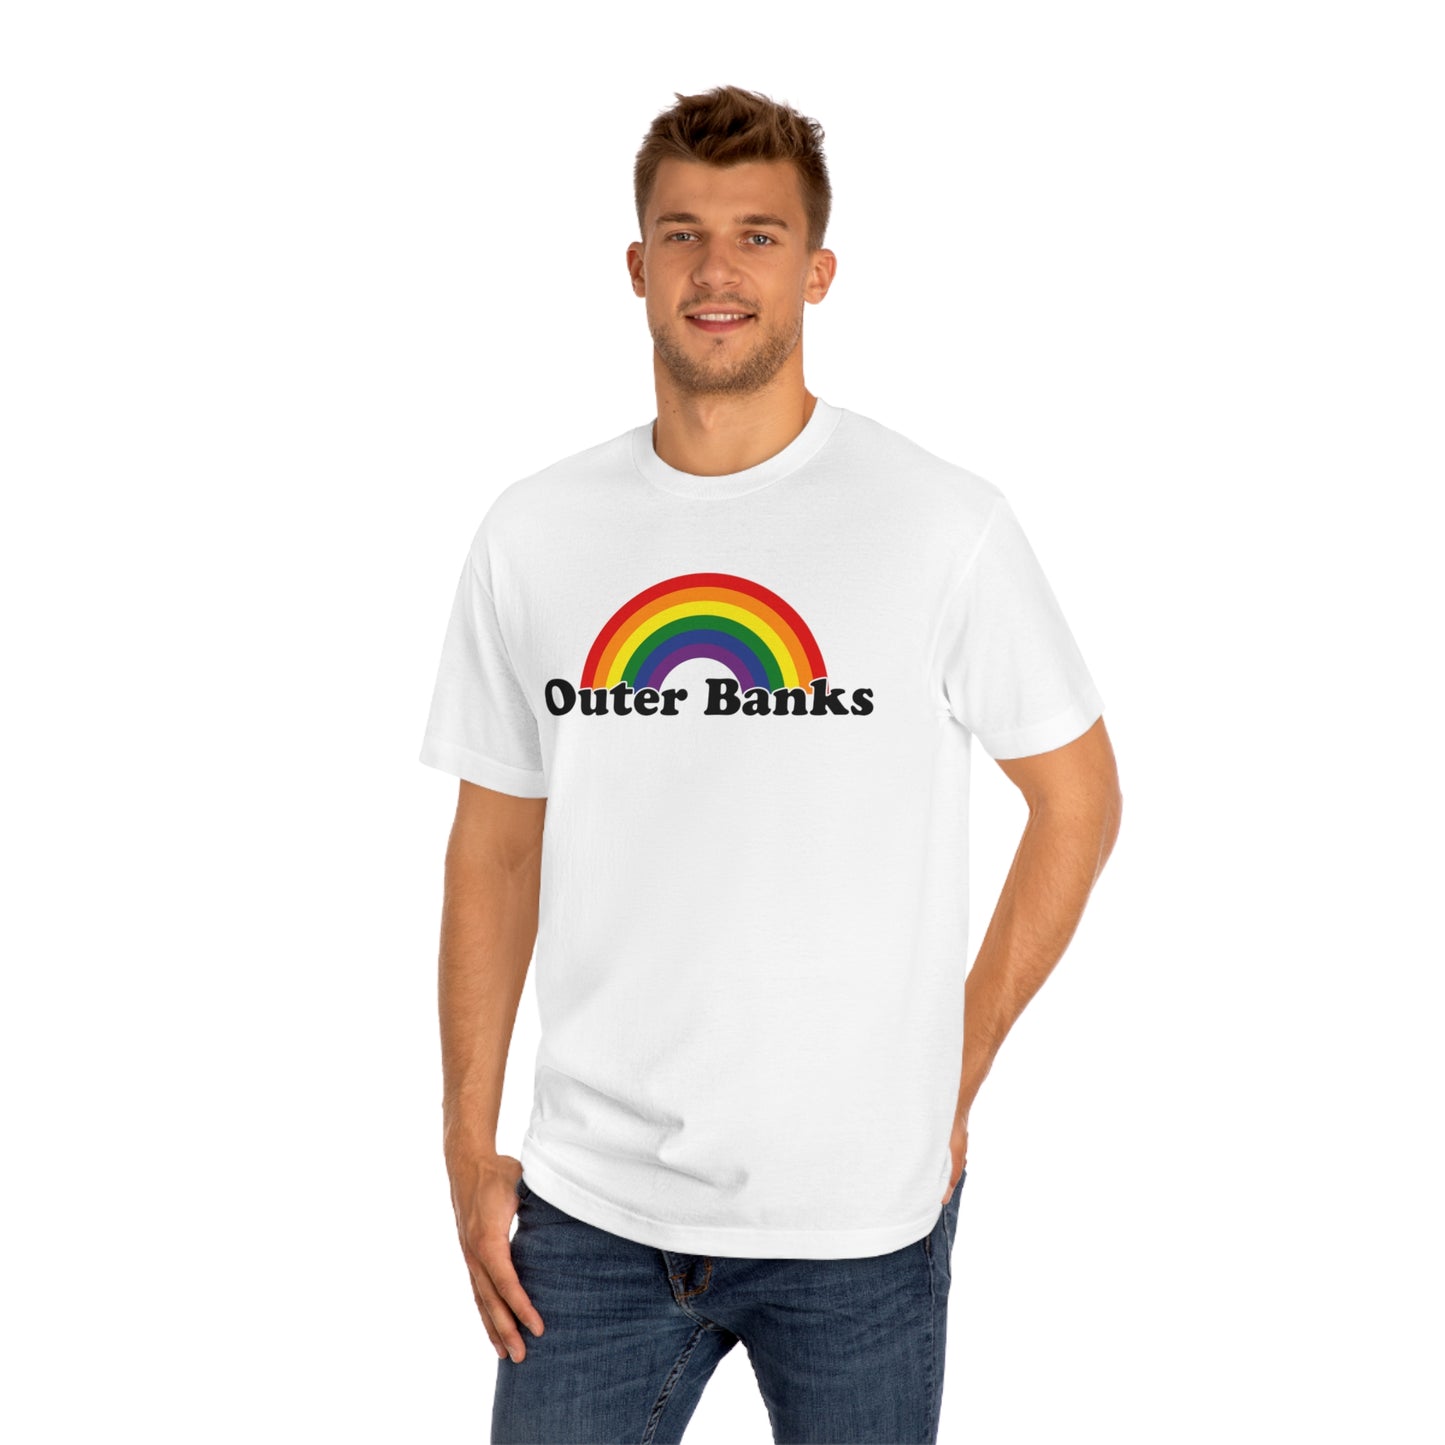 Outer Banks Rainbow Tee